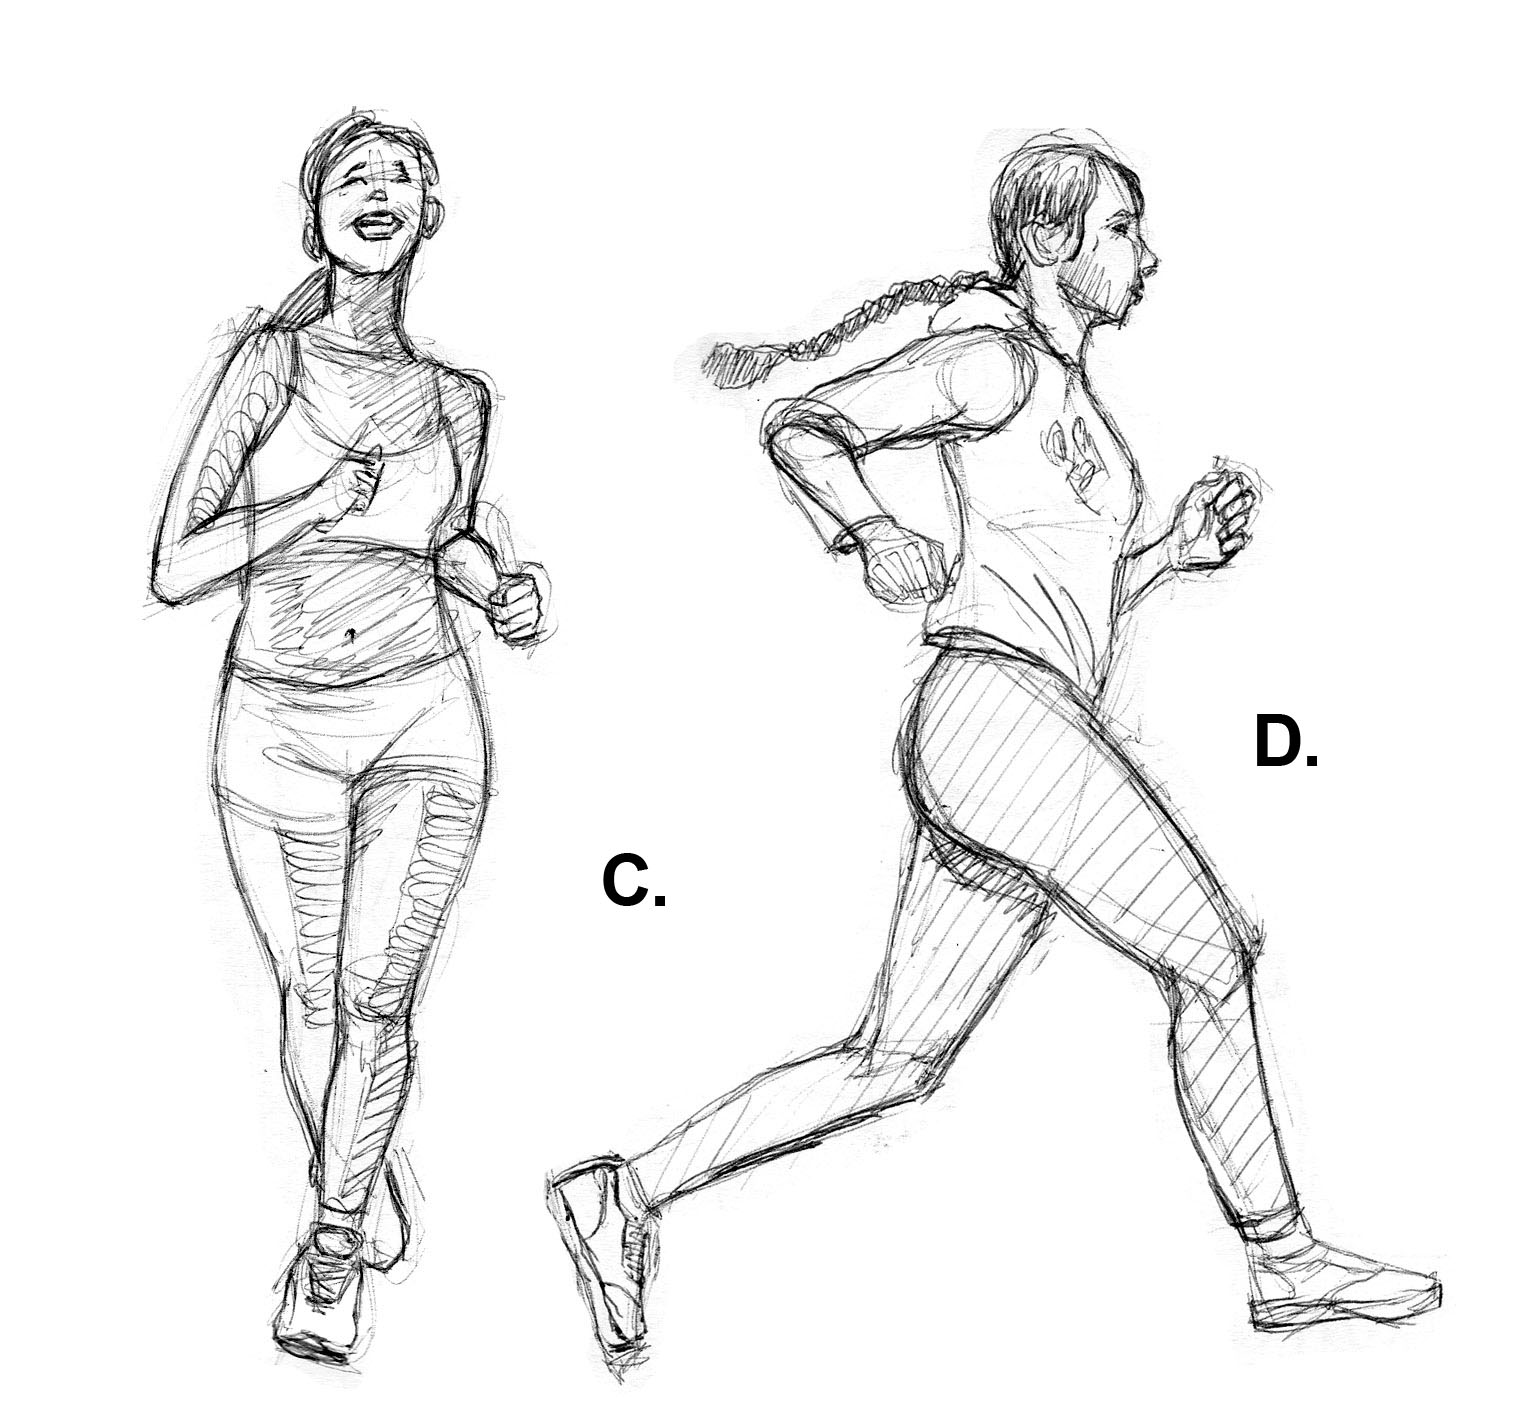 Robsworkblog: Exercise Sketches